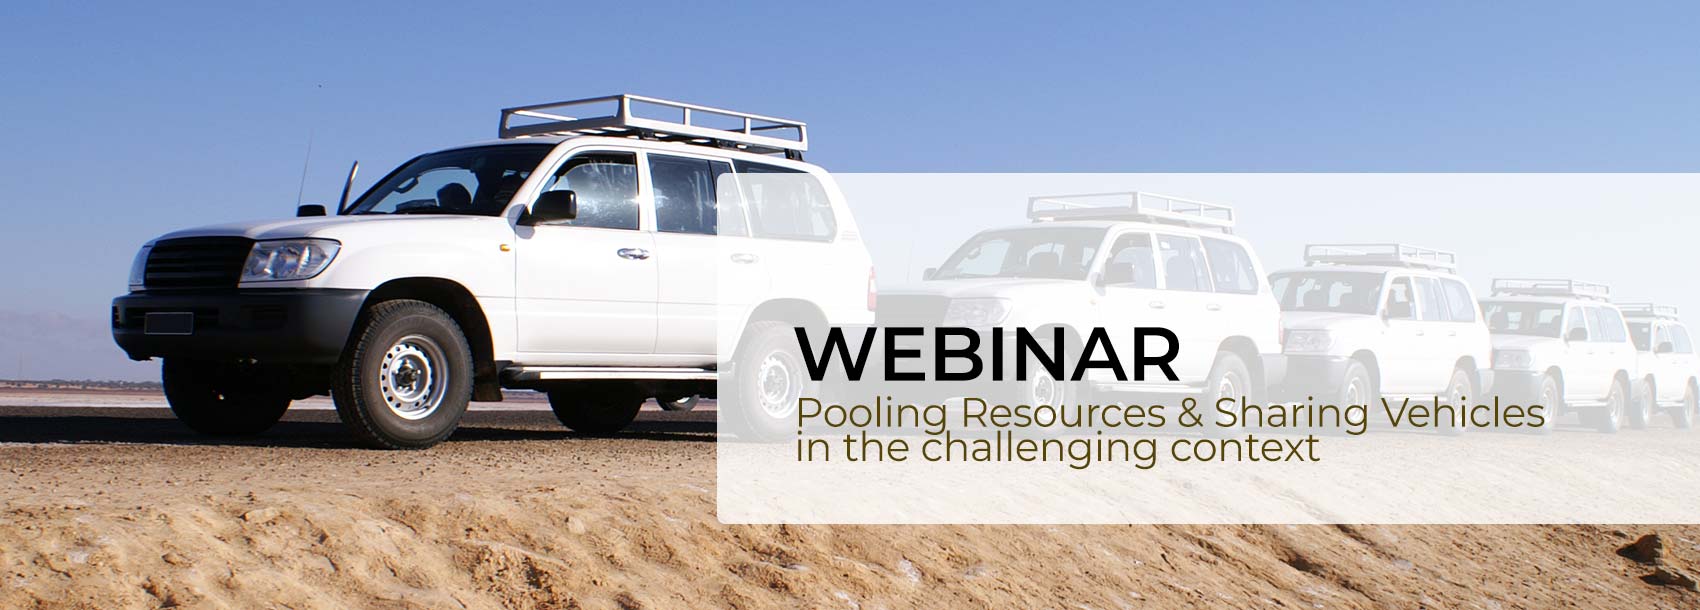 HumaNav webinar banner : pooling resources & sharing vehicles